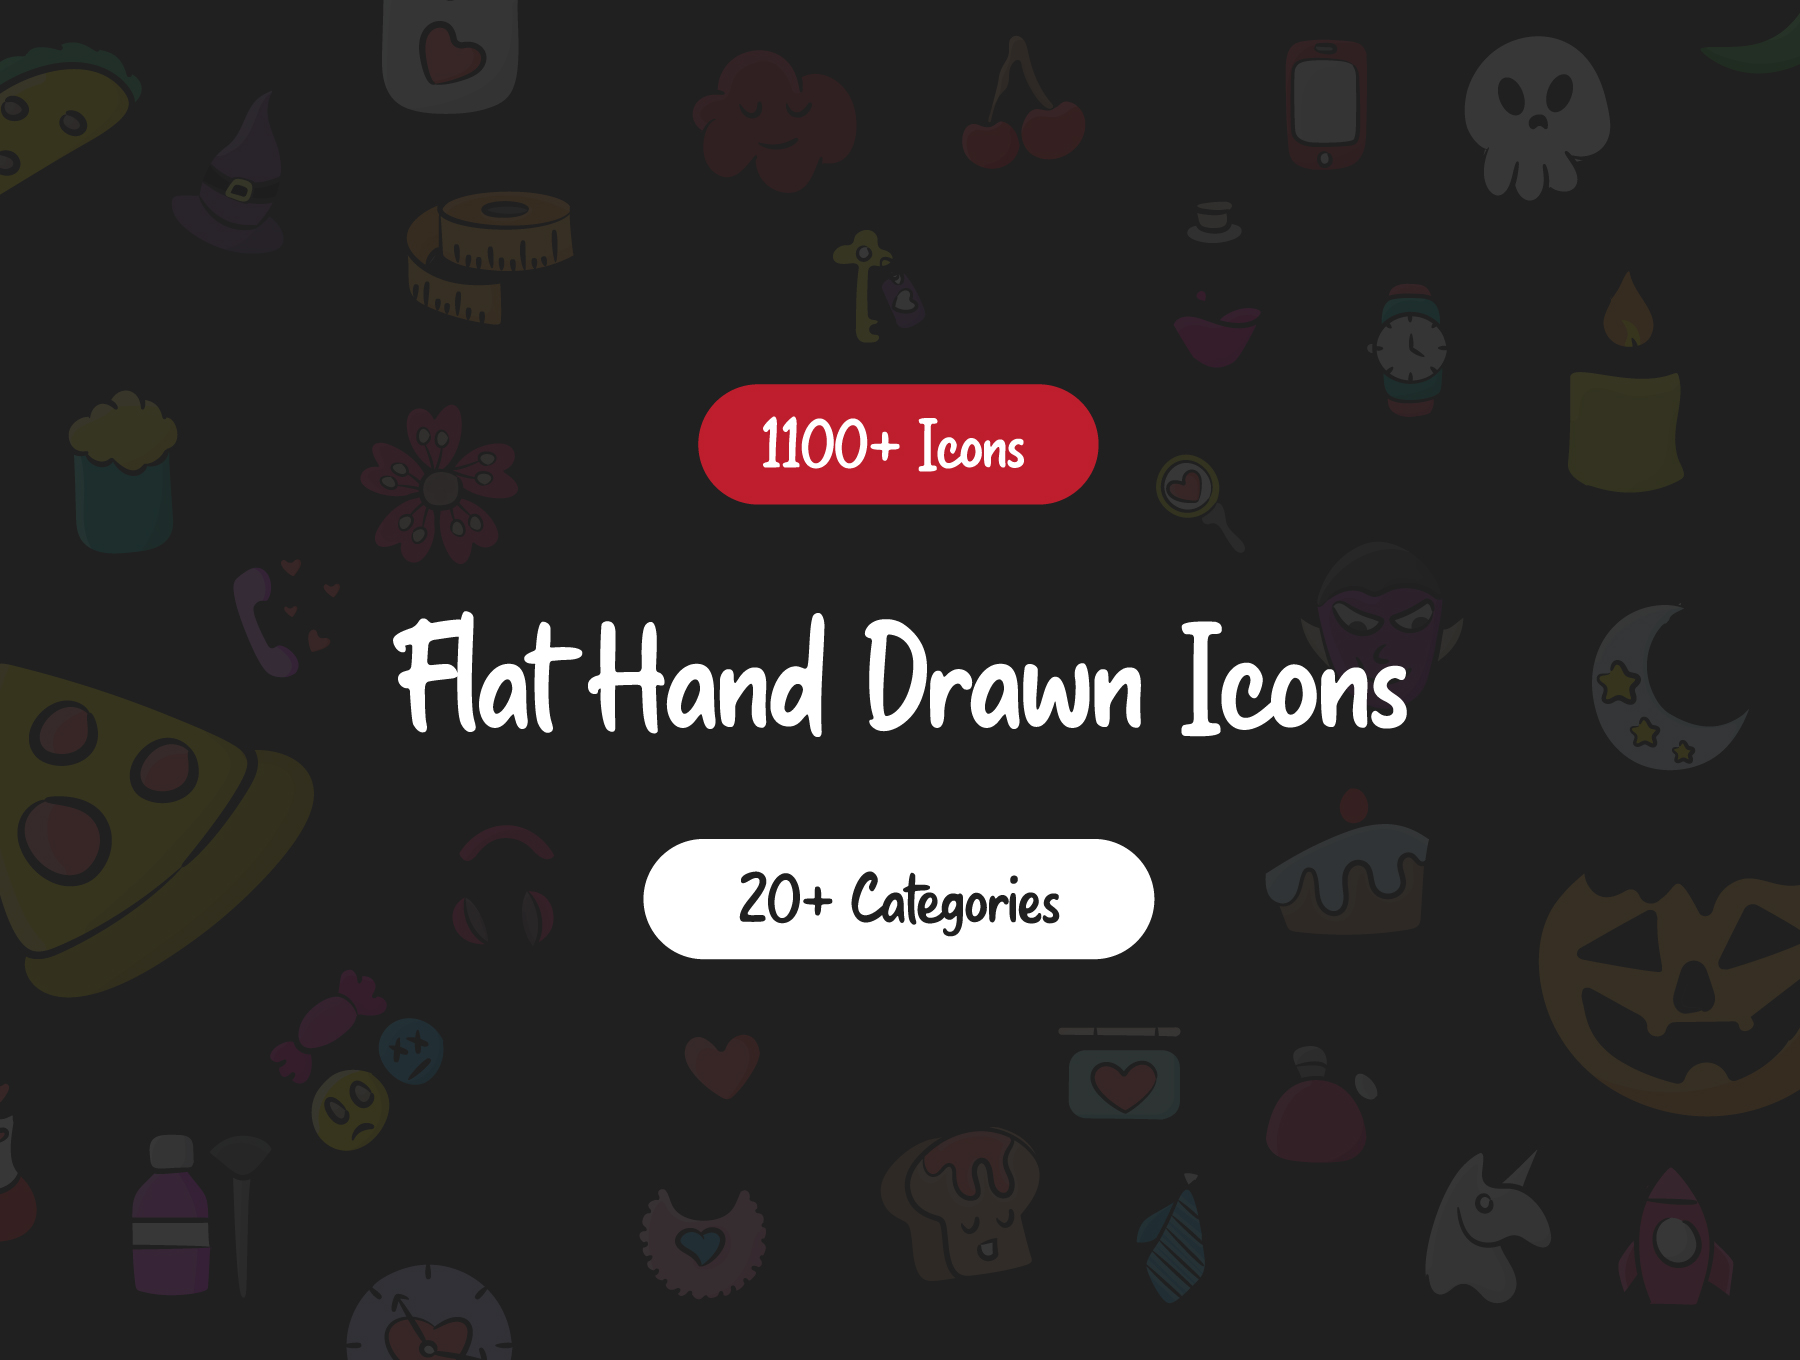 1100 Flat icons